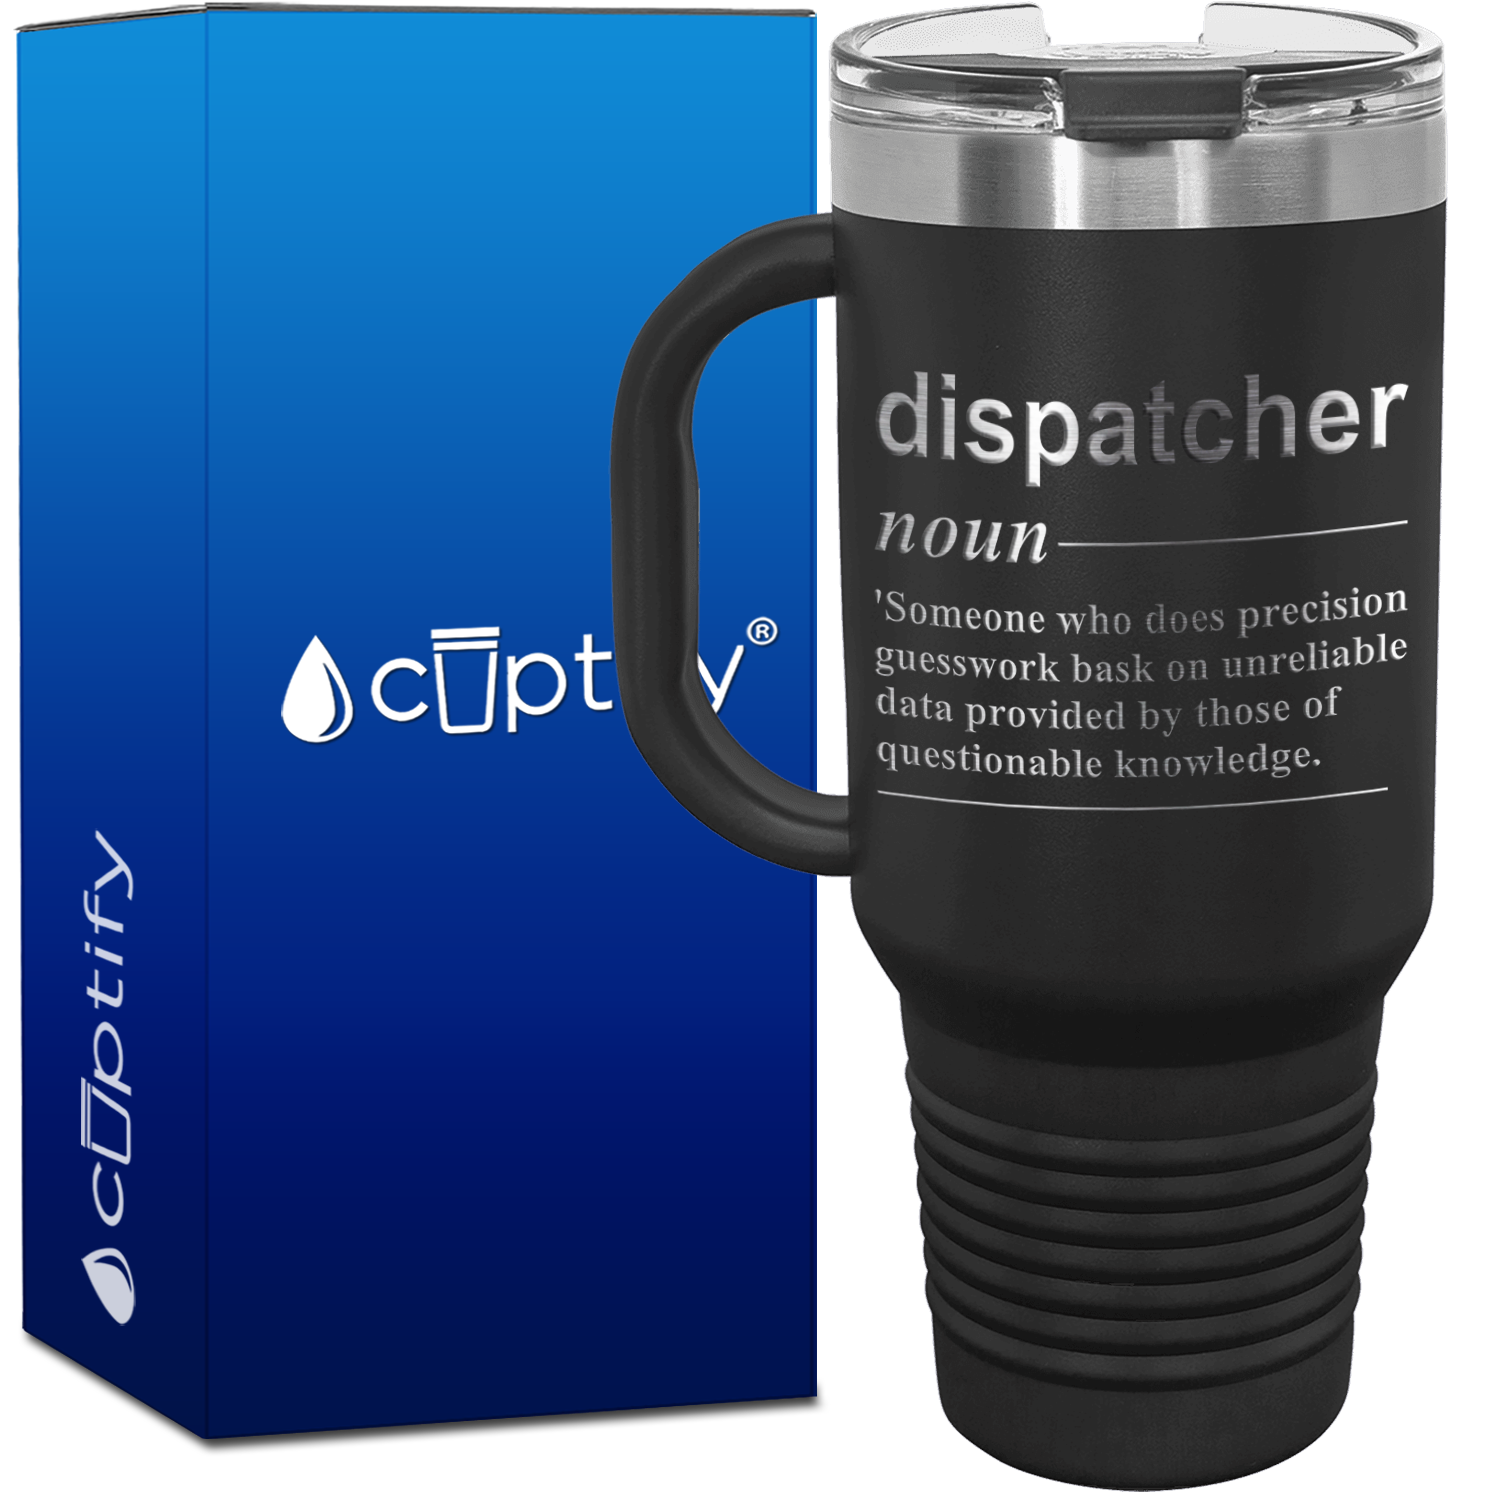 Dispatcher Noun Definition 40oz Dispatcher Travel Mug